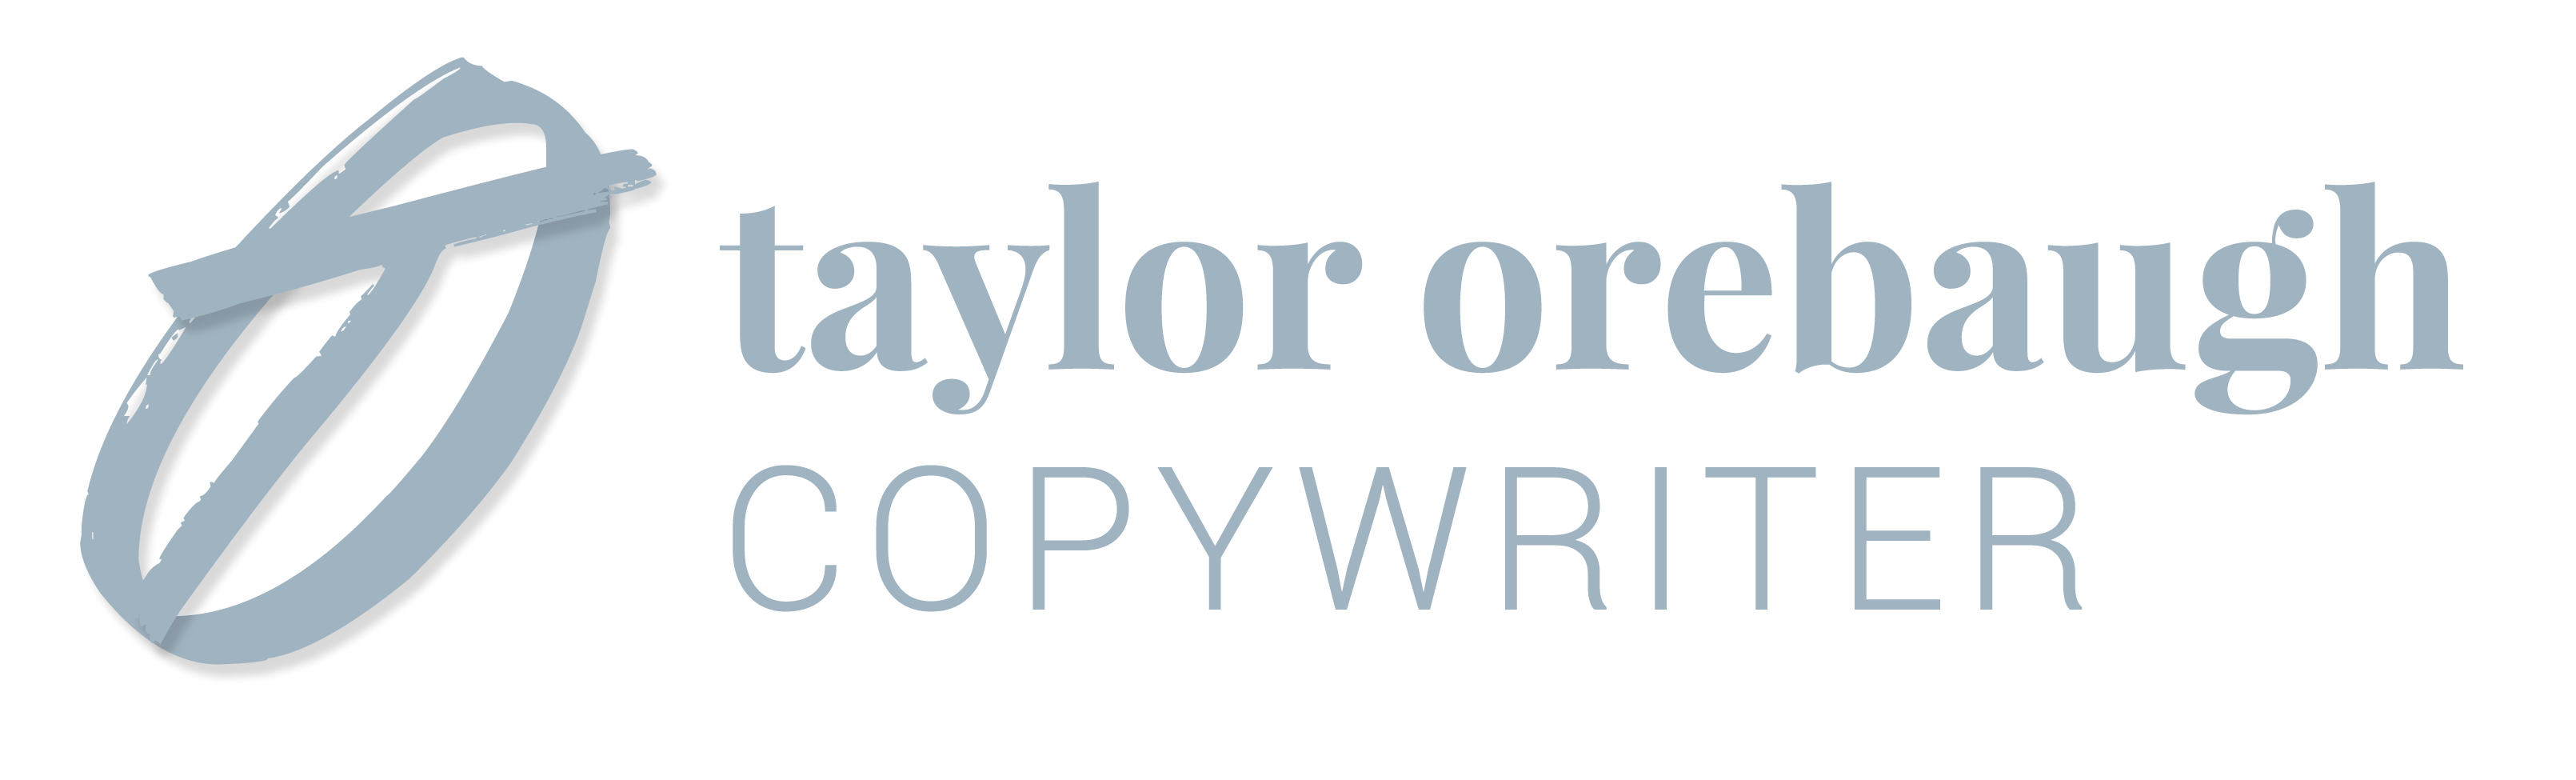 Taylor Orebaugh